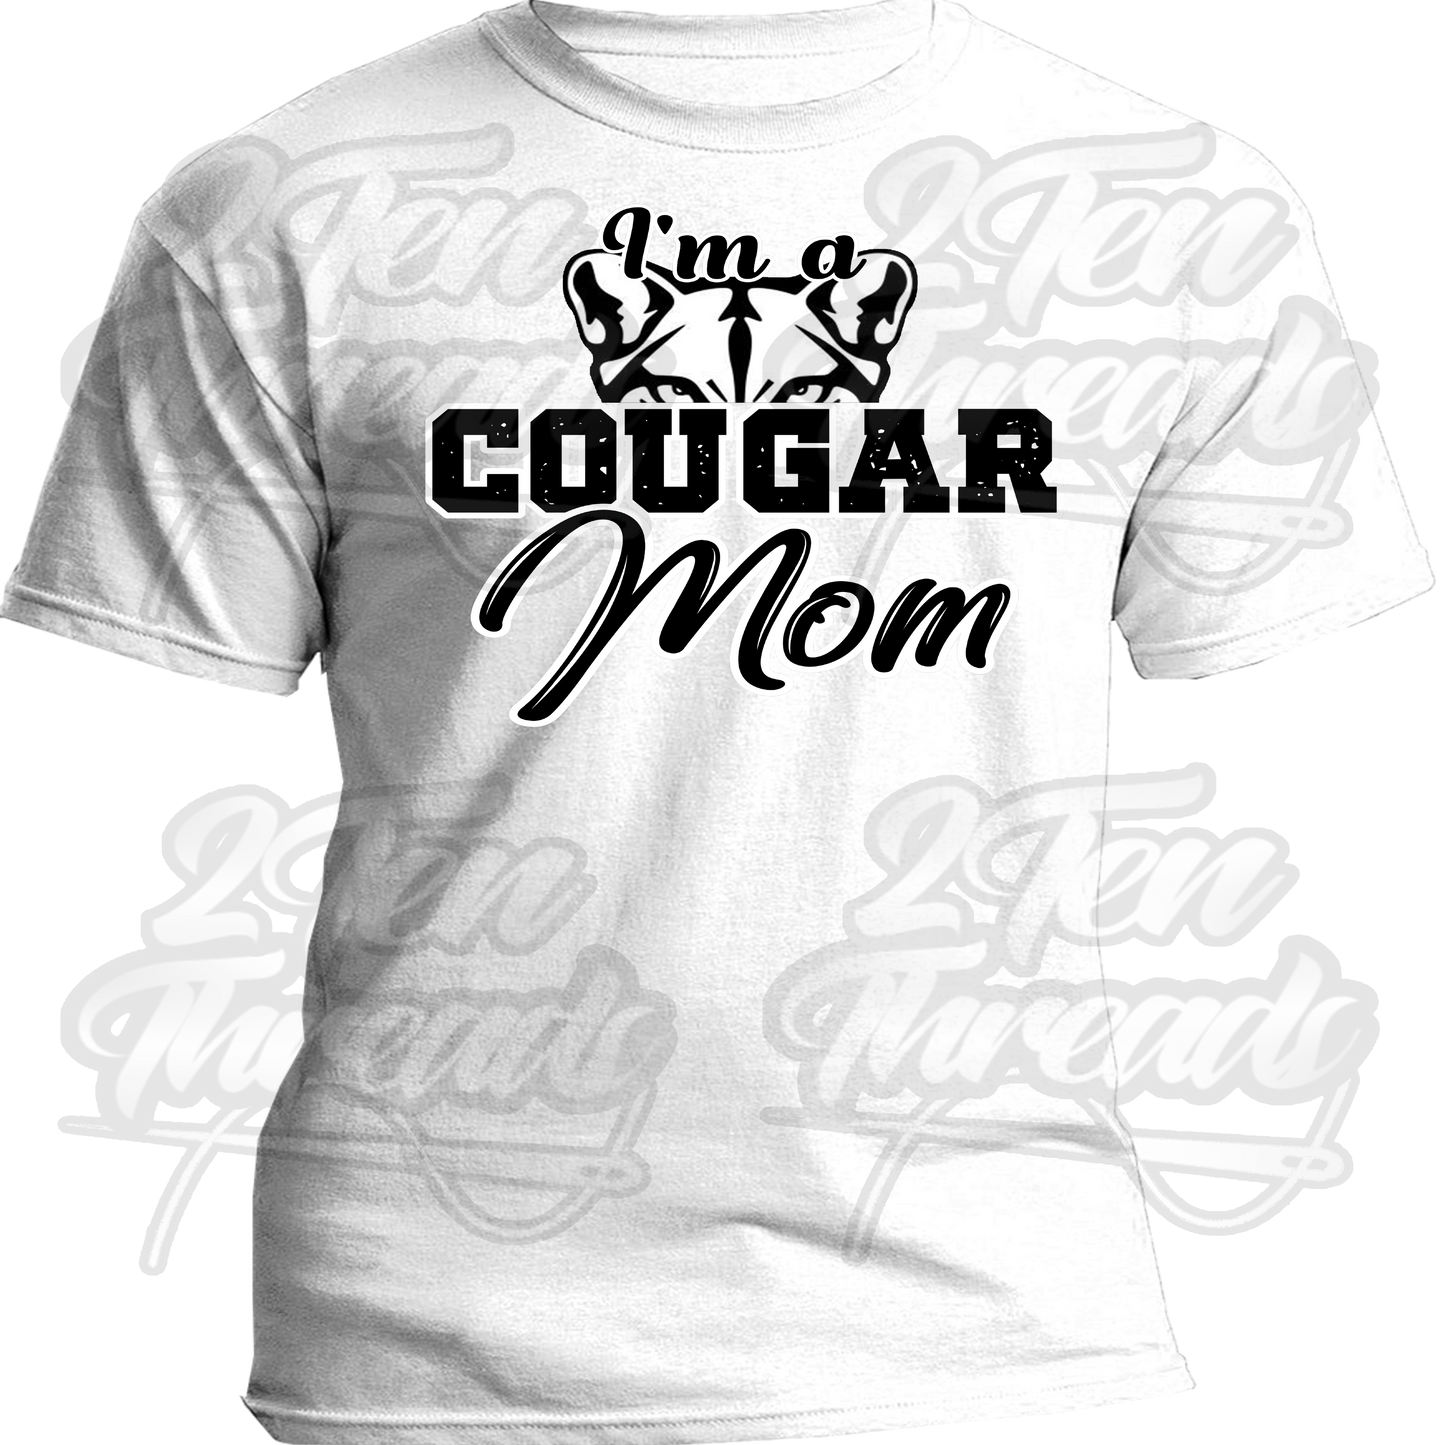 Clark Cougar Mom!